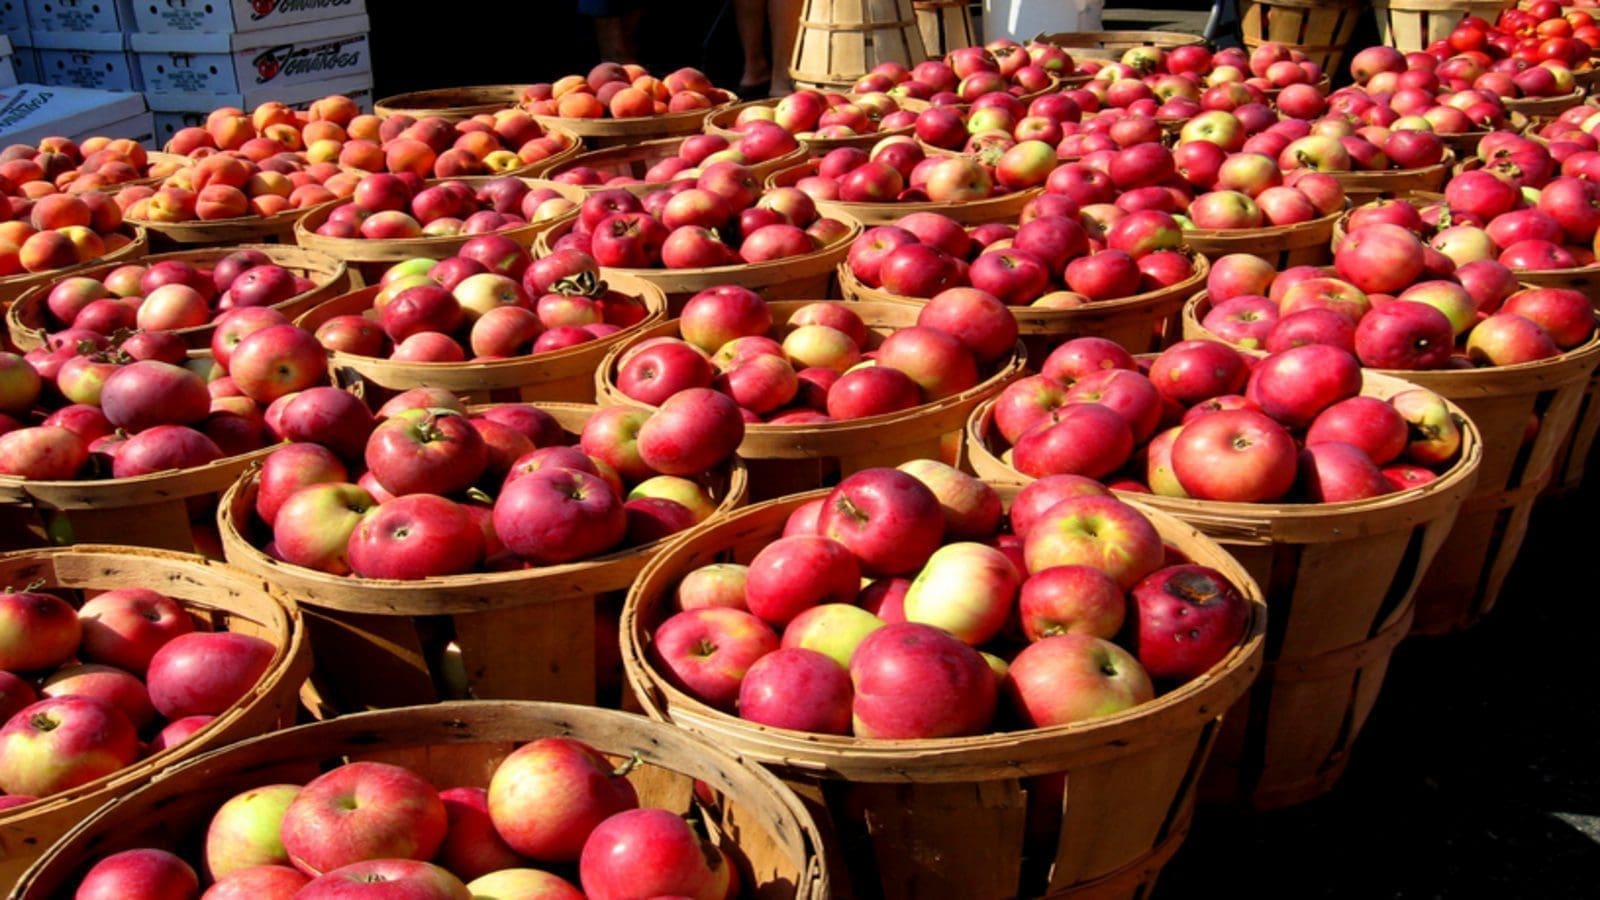 Researchers identify spoilage microorganisms in apple juice enabling better control